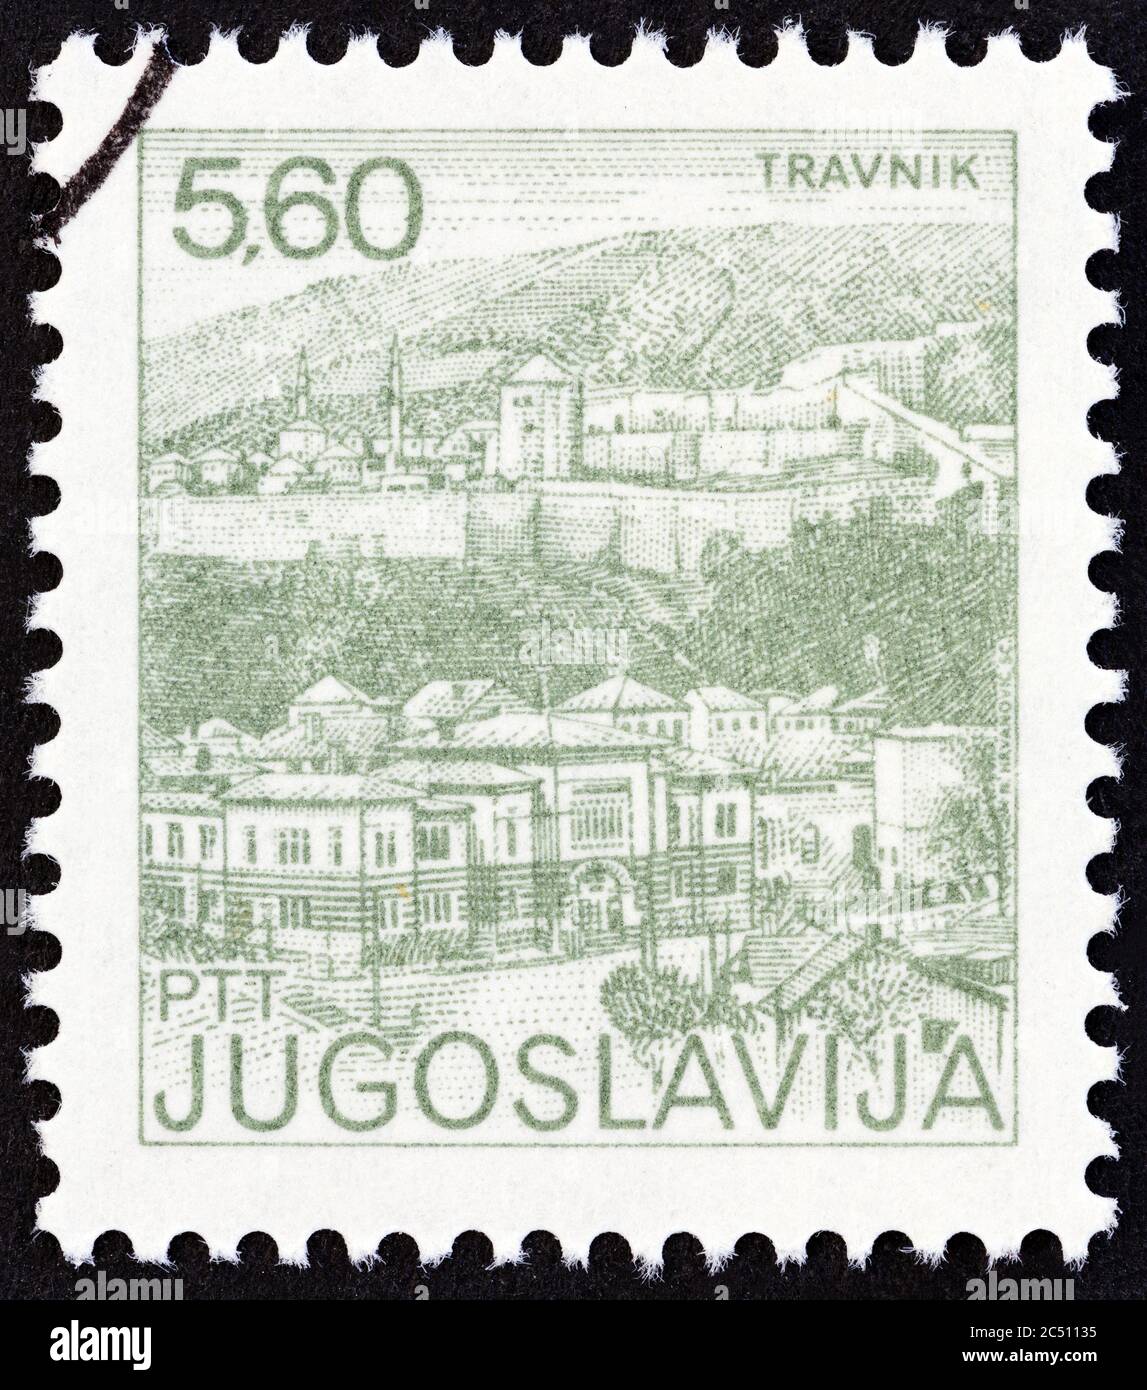 YUGOSLAVIA - CIRCA 1981: A stamp printed in Yugoslavia shows Travnik, Bosnia and Herzegovina, circa 1981. Stock Photo